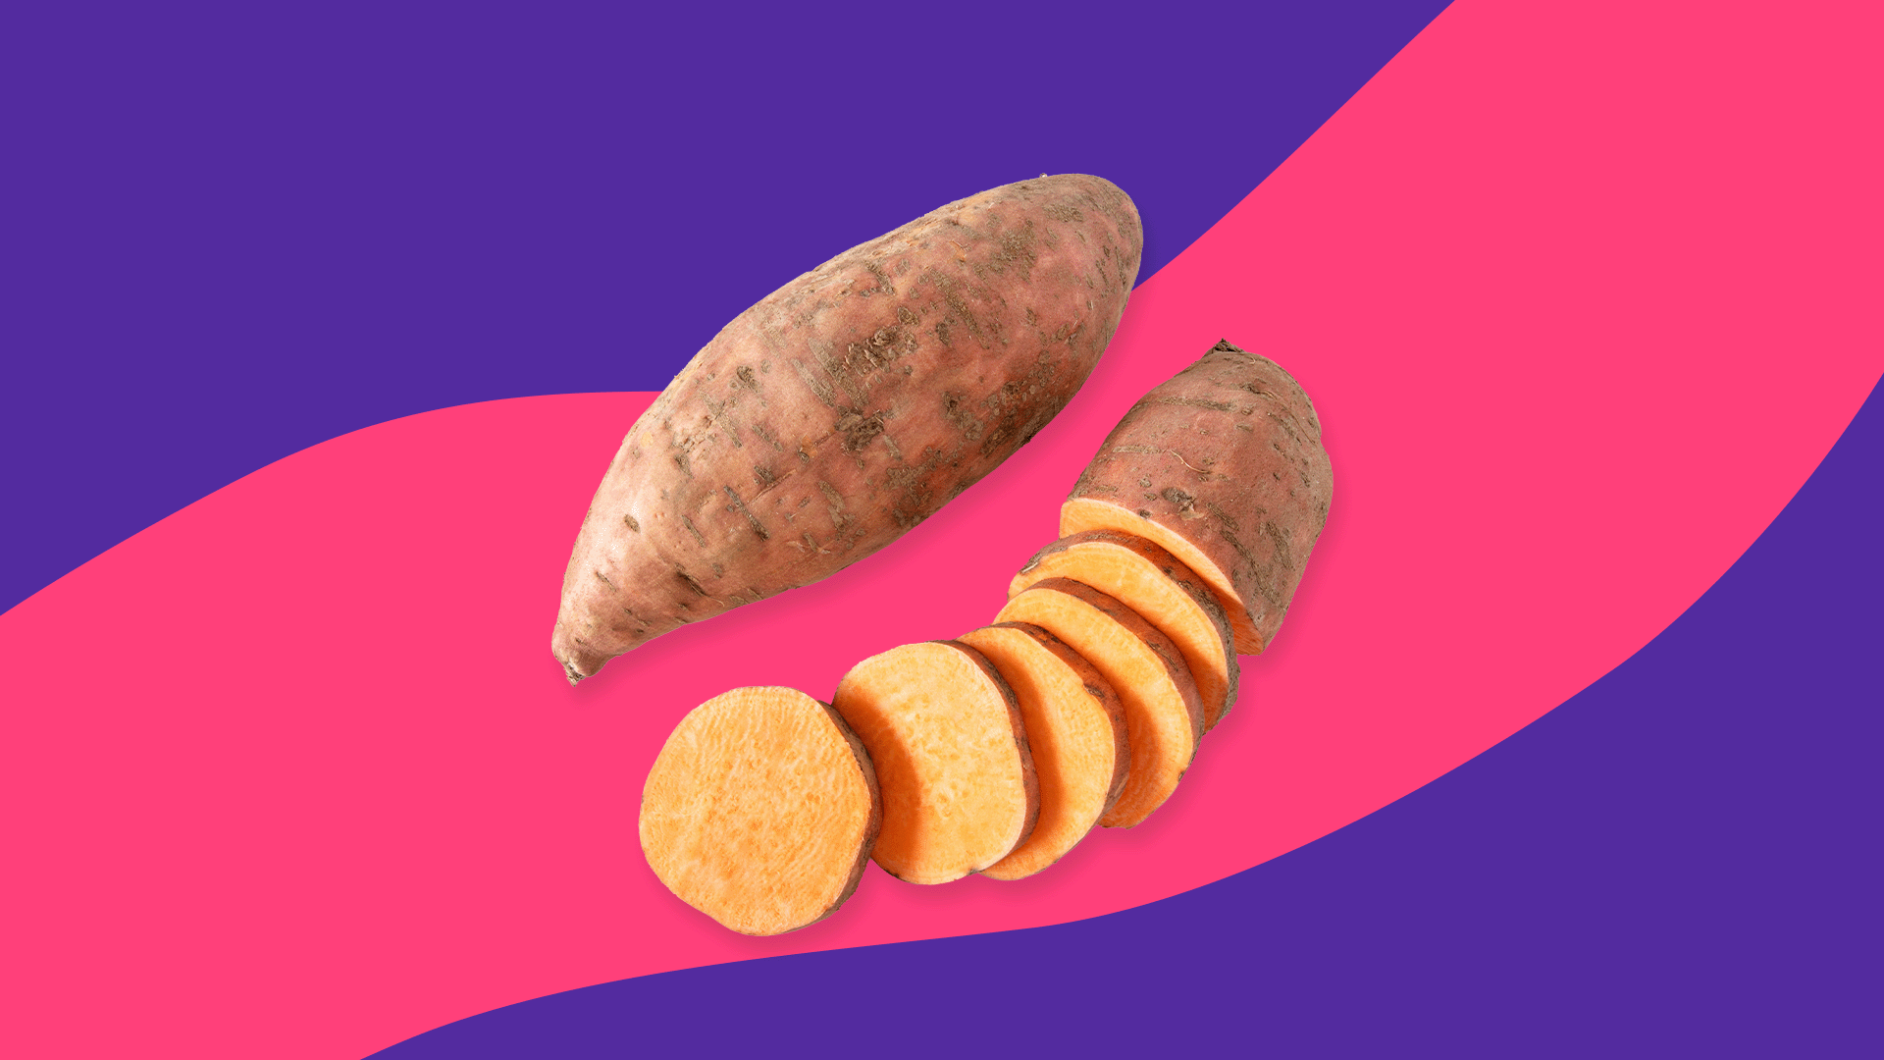 Image of a sweet potato with slices - sweet potato benefits